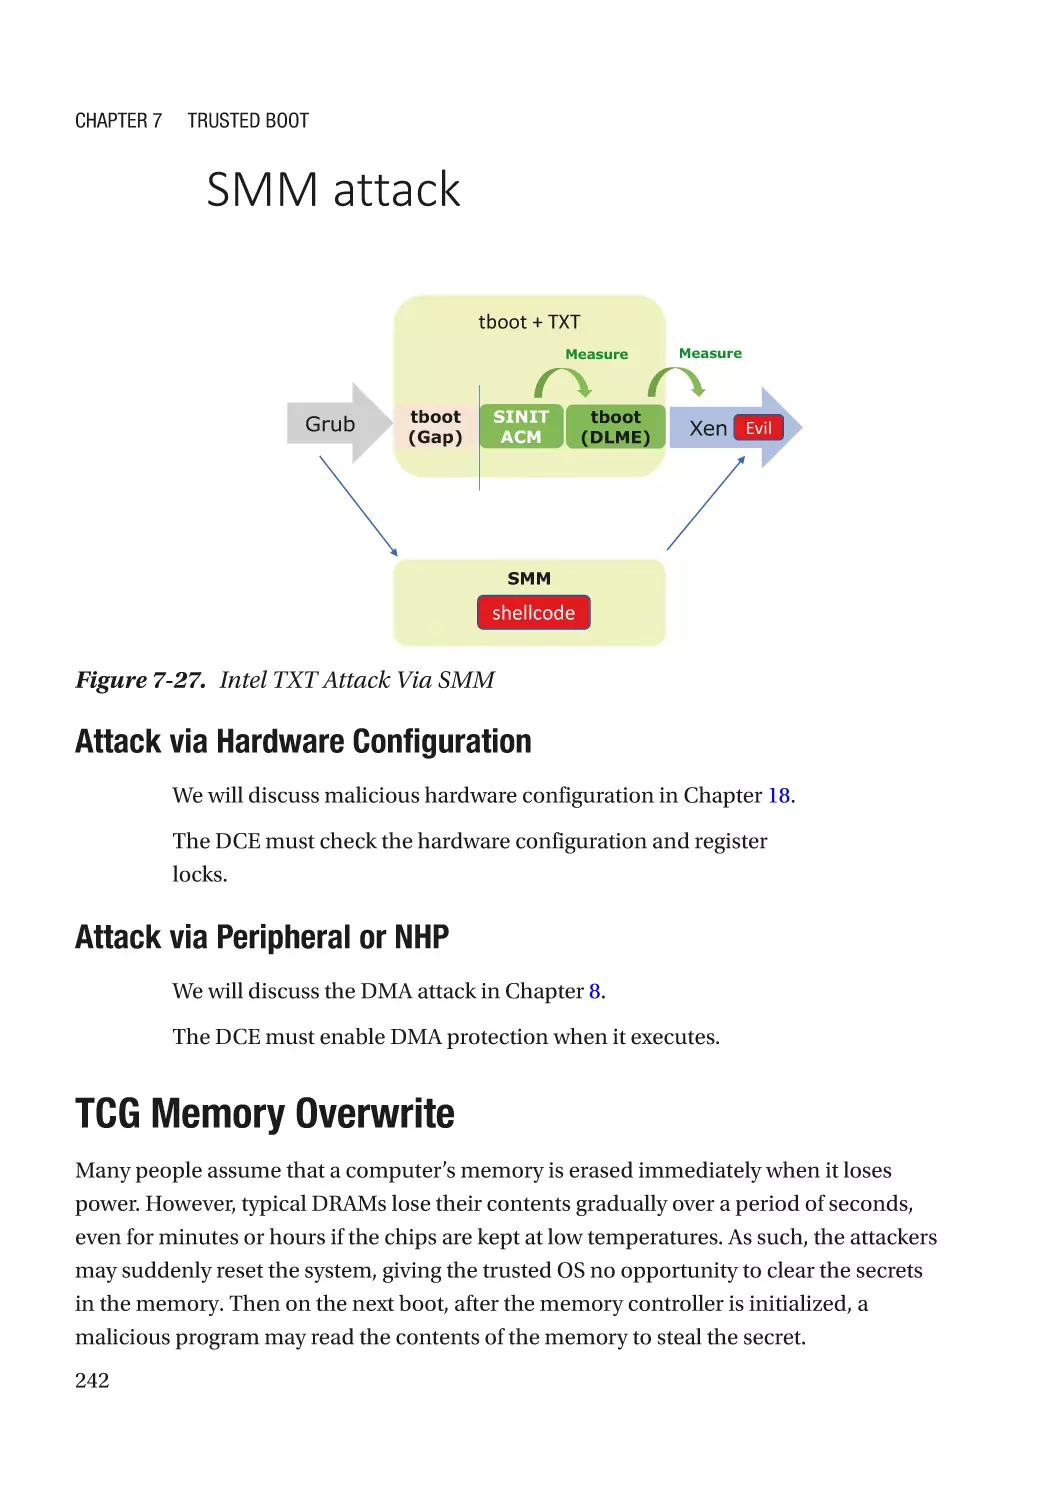 Attack via Hardware Configuration
Attack via Peripheral or NHP
TCG Memory Overwrite